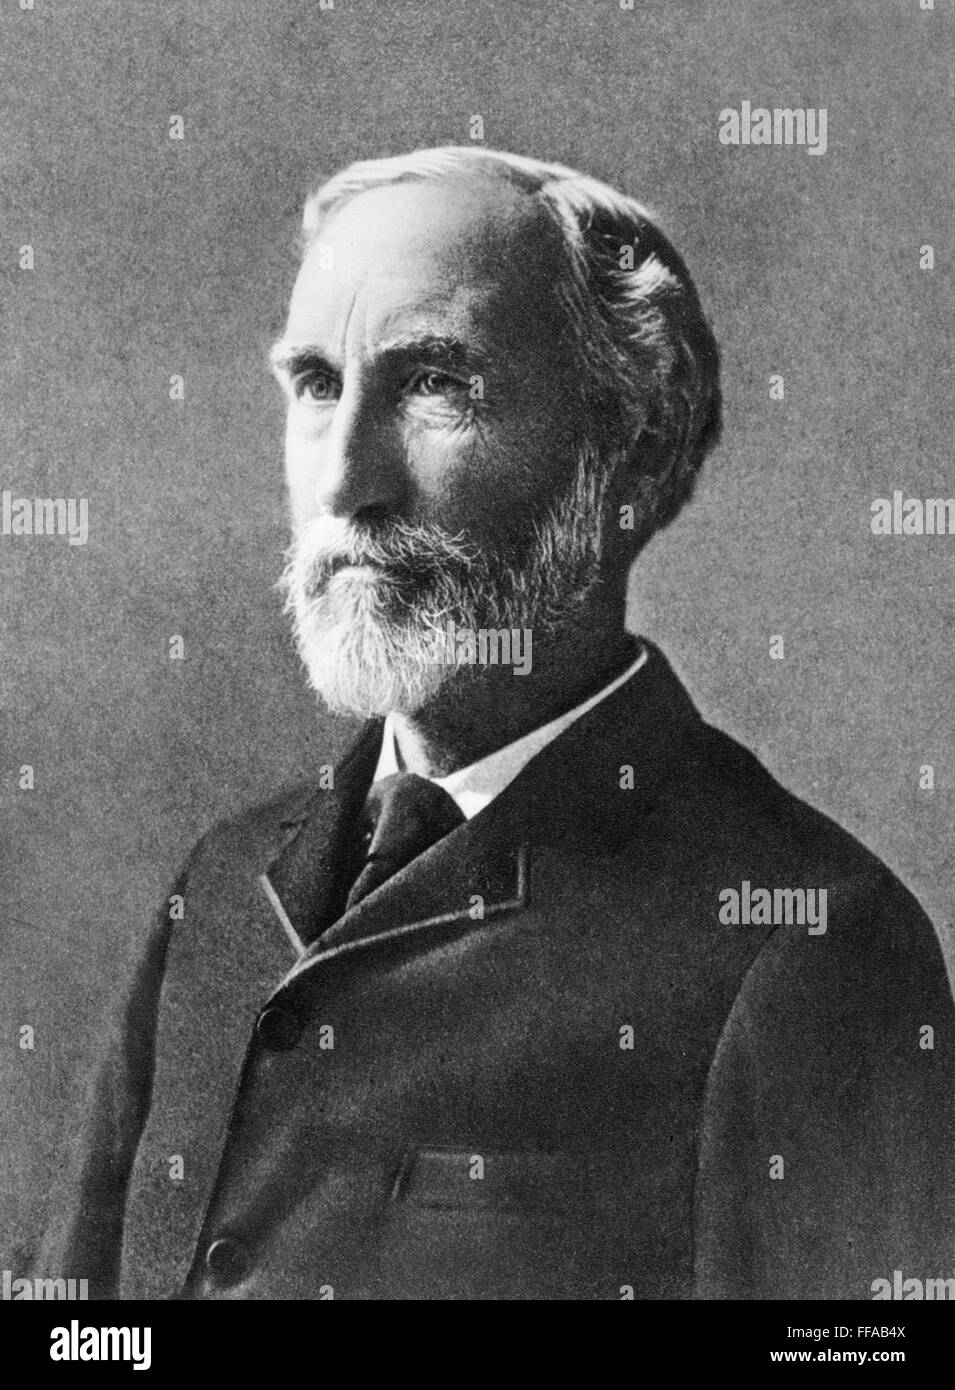 JOSIAH WILLARD GIBBS (1839-1903). American physicist. Stock Photo